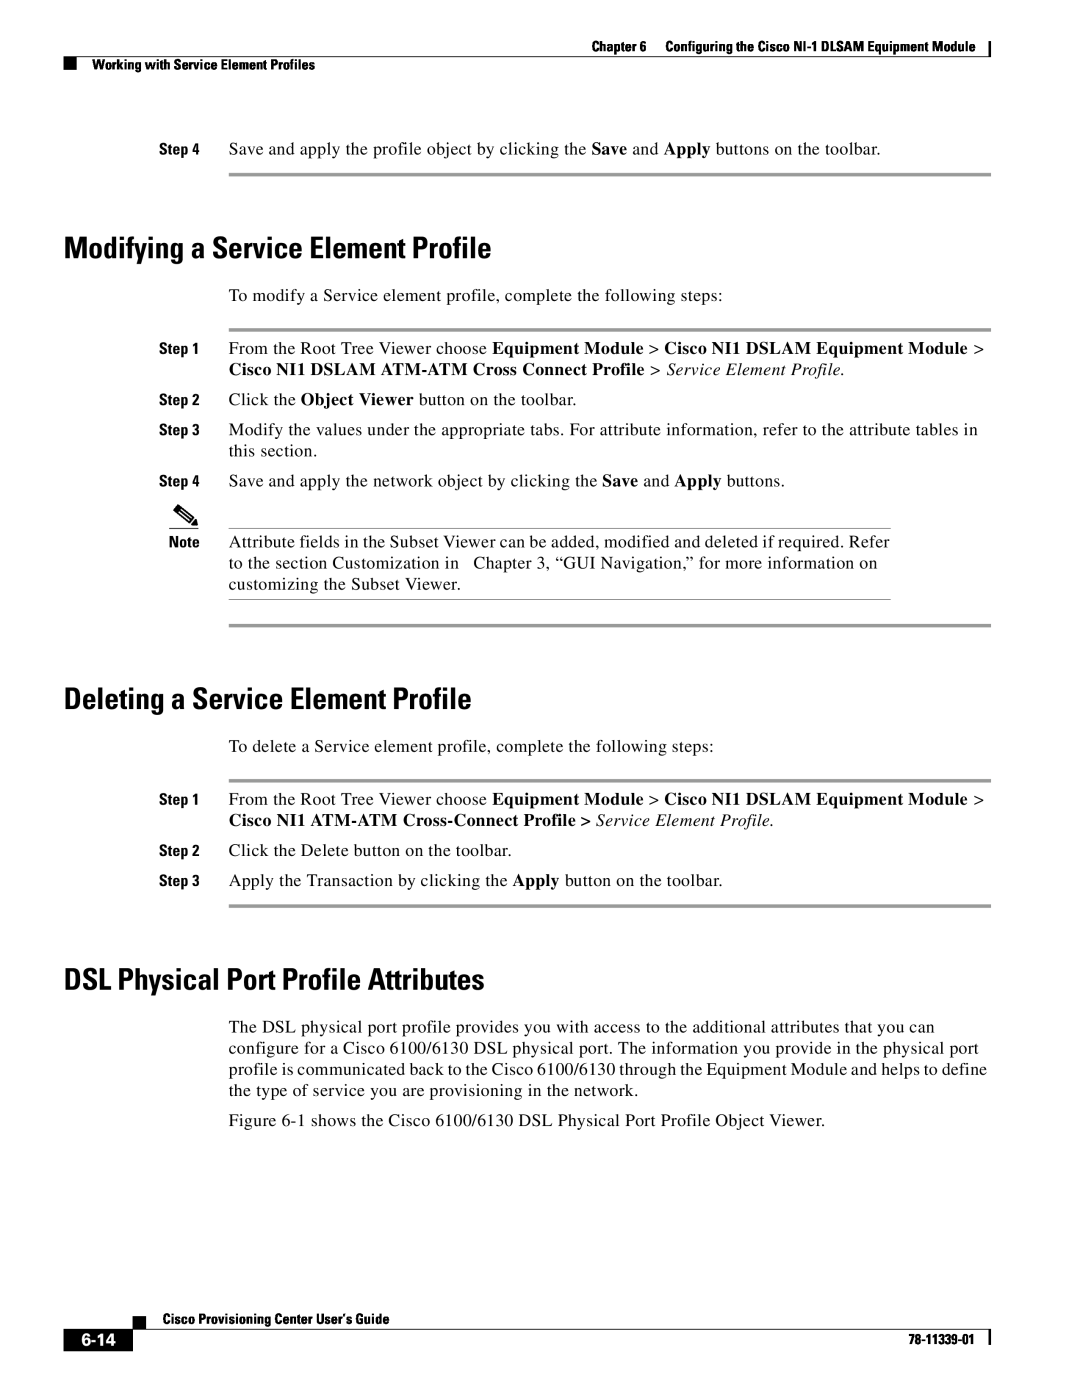 Cisco Systems NI-1 manual Modifying a Service Element Profile, Deleting a Service Element Profile, 6-14 